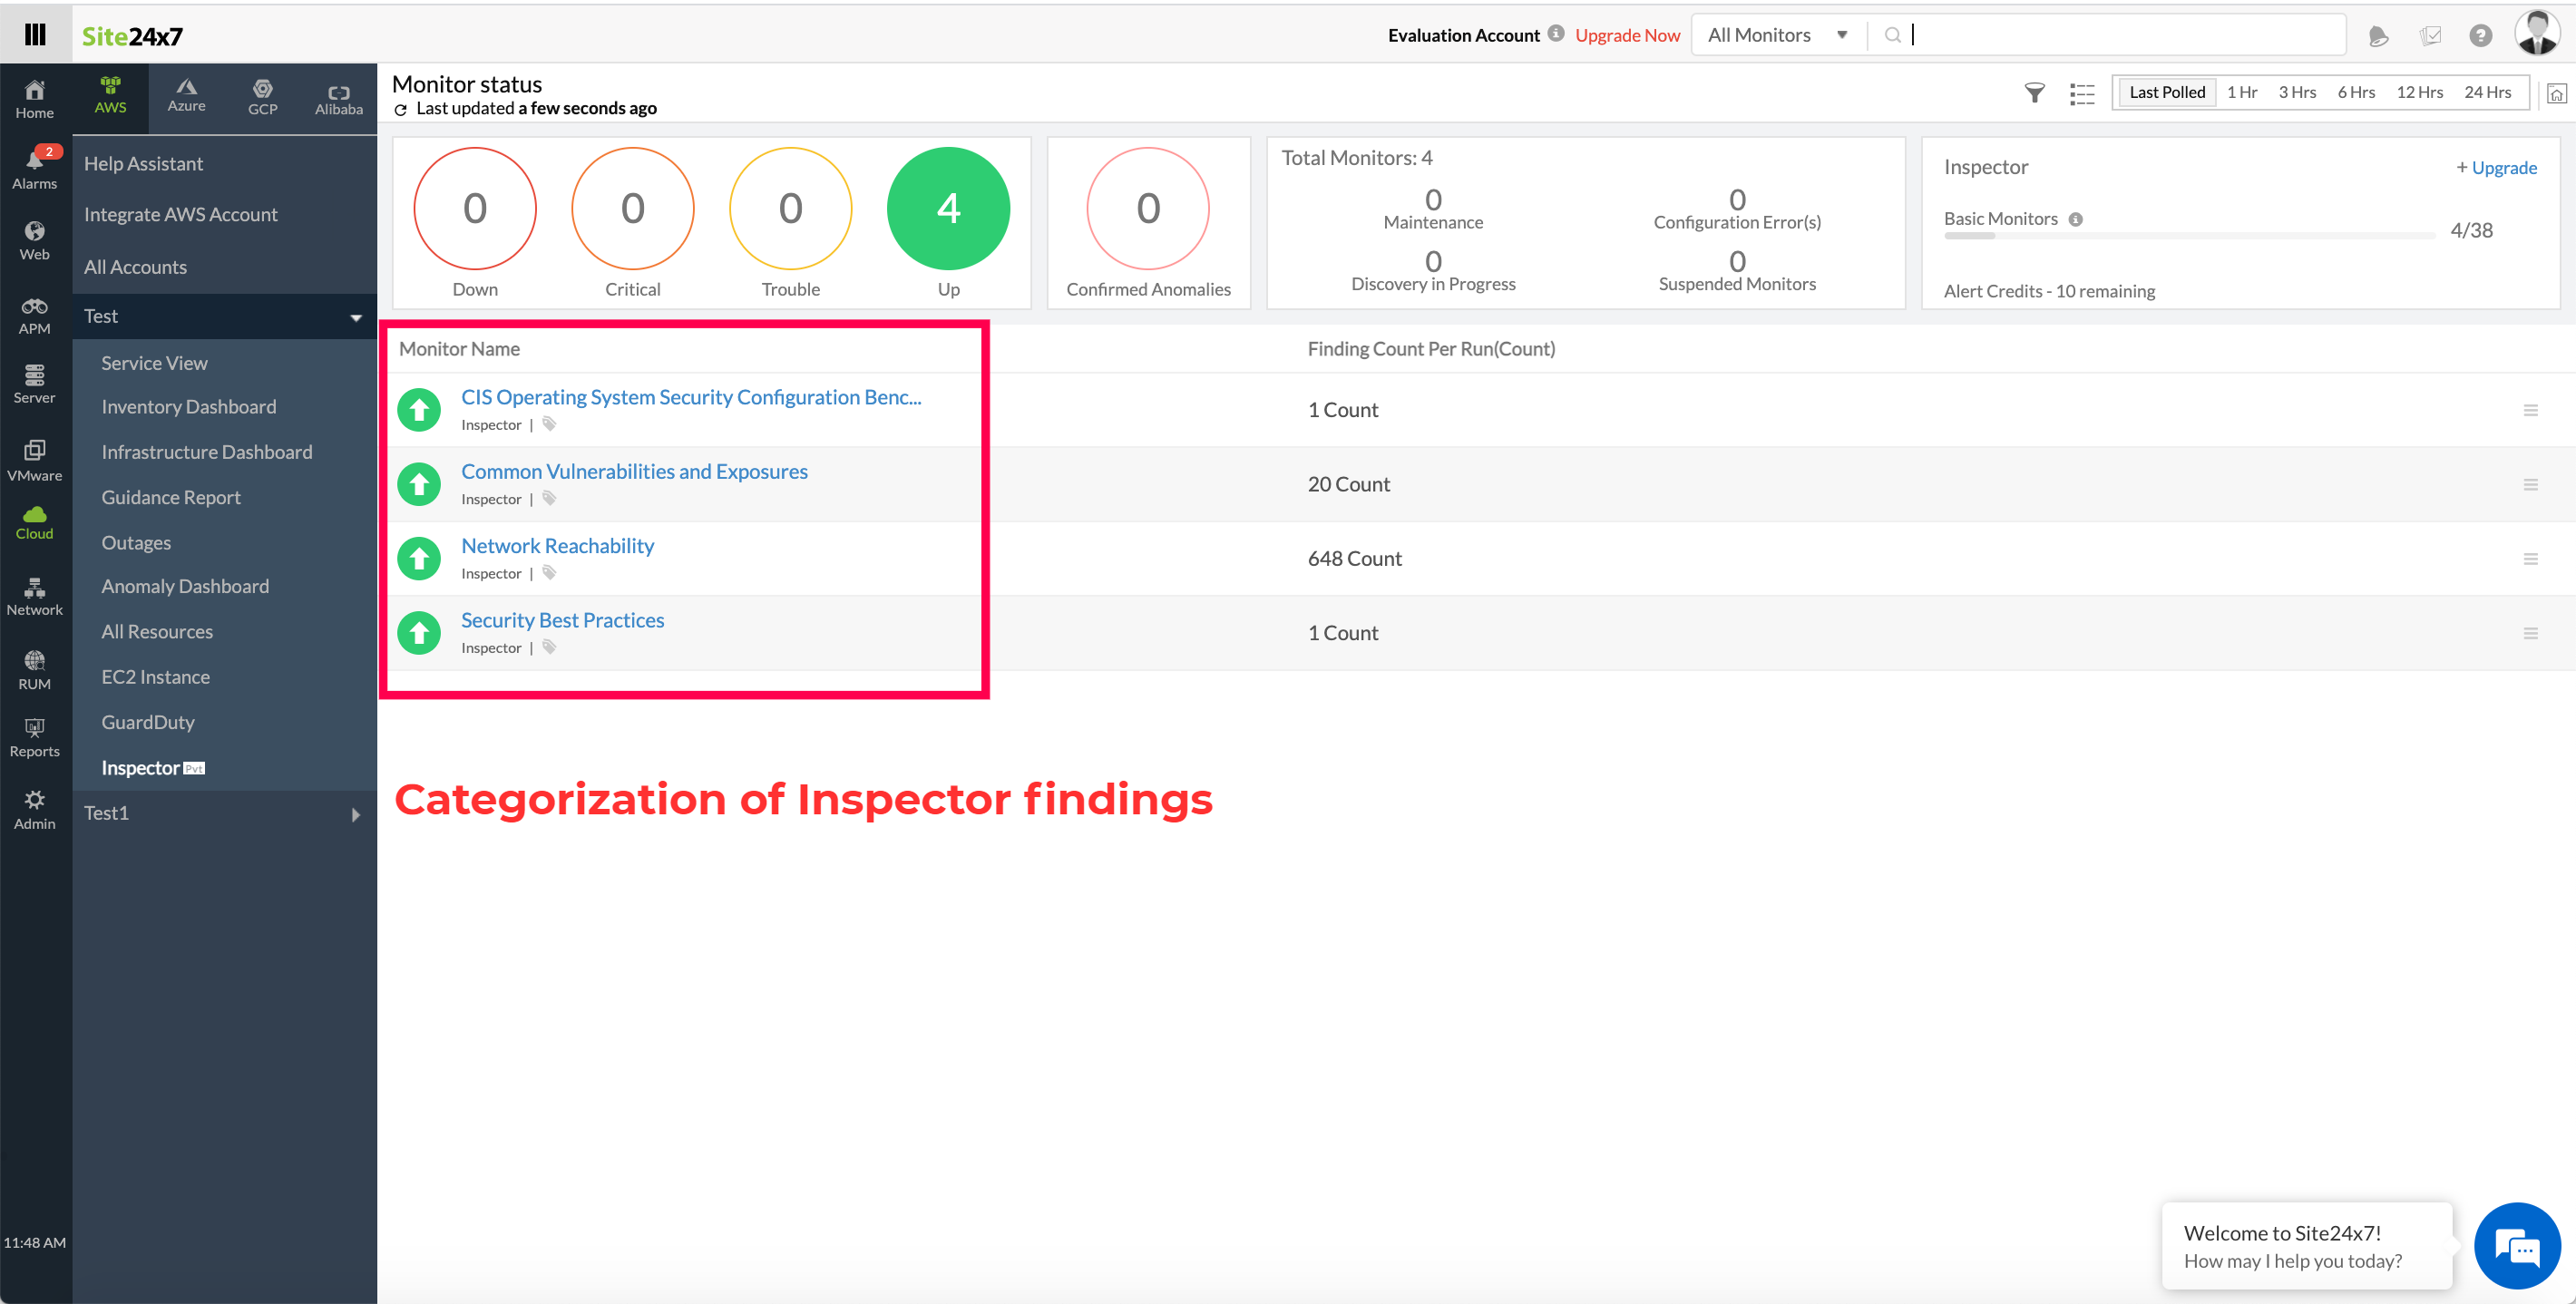 Categorization of Inspector Findings